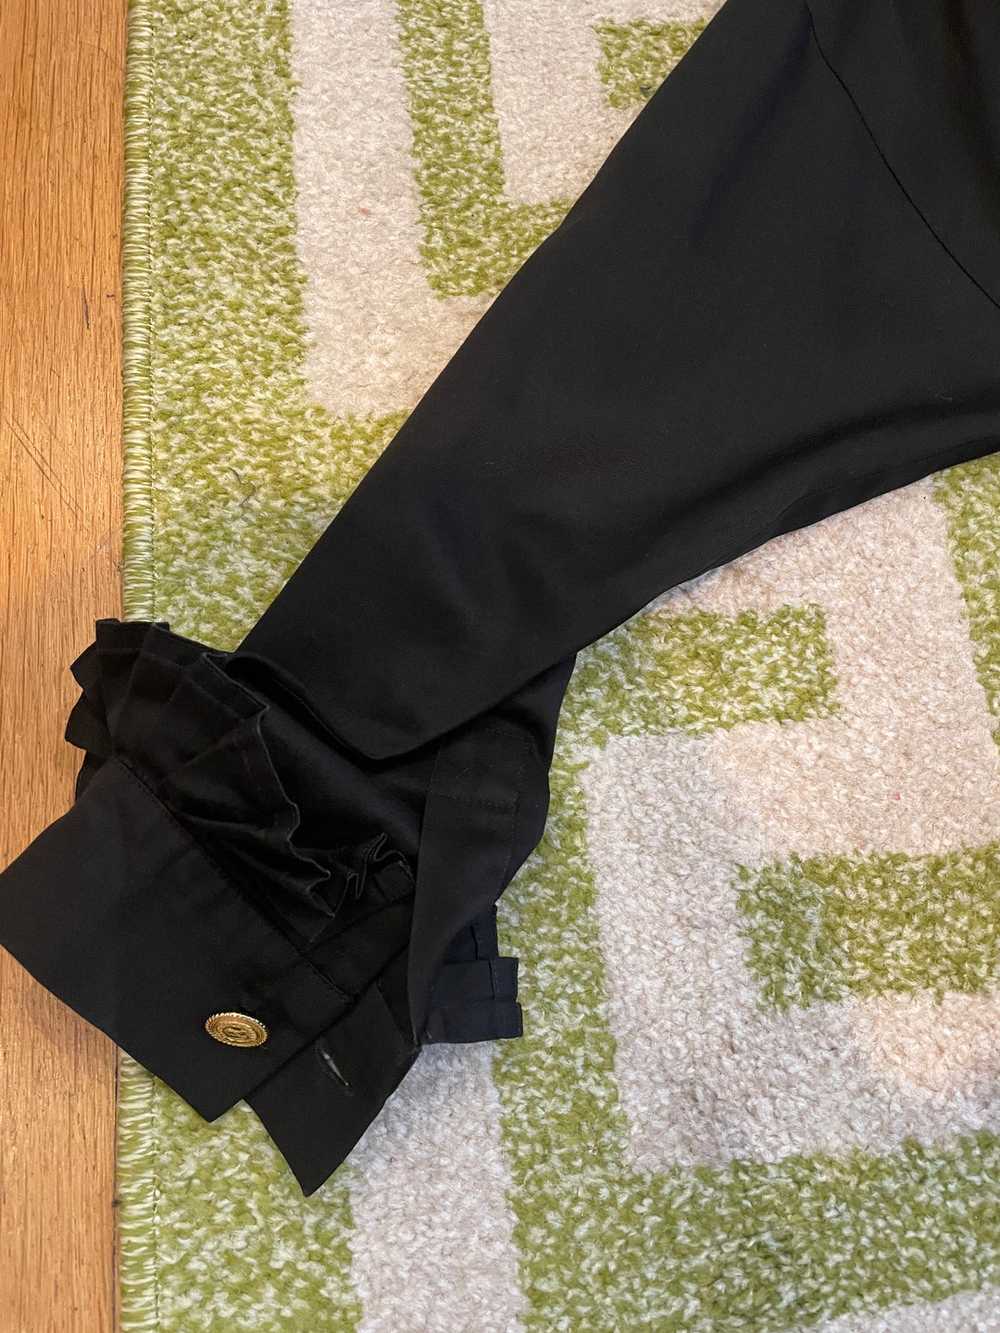 Chanel Black Cotton Dress (Size 4) - image 5